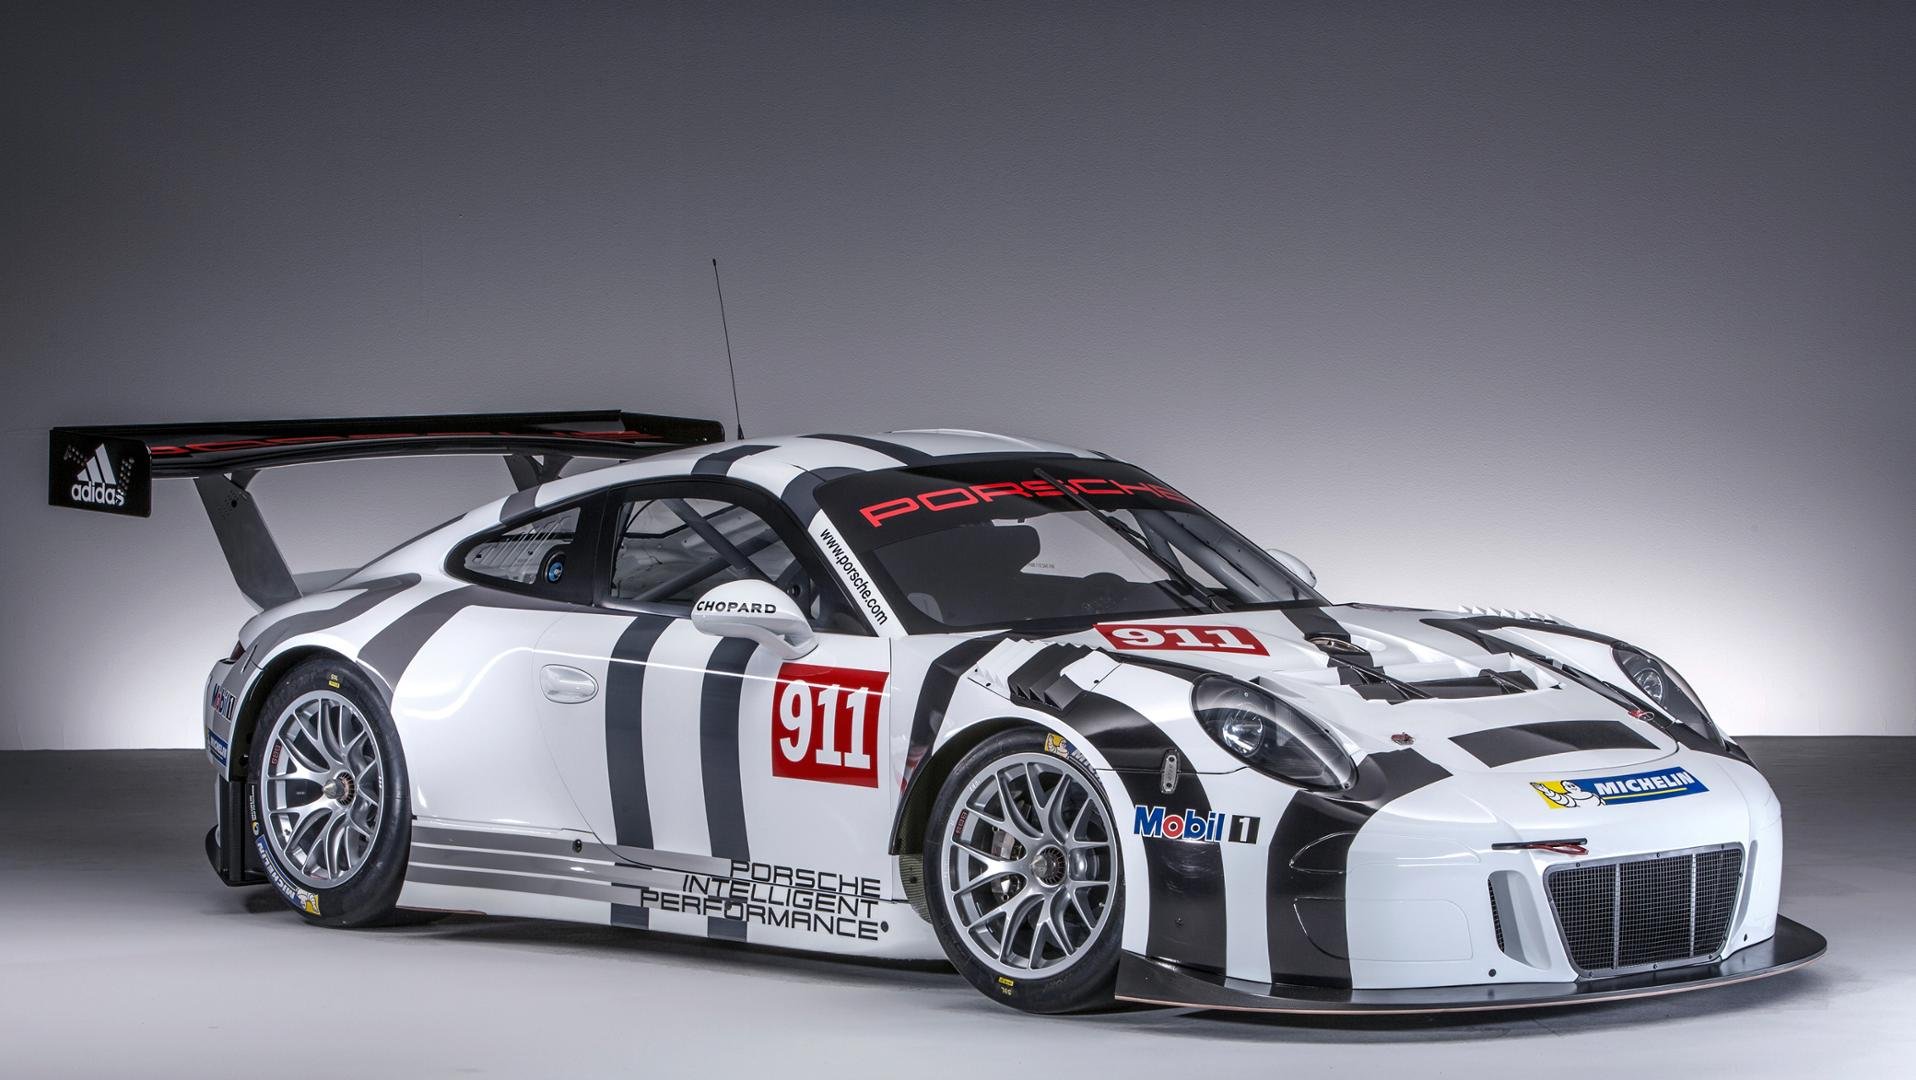 More information about "Sector3 annuncia la licenza Porsche per RaceRoom"